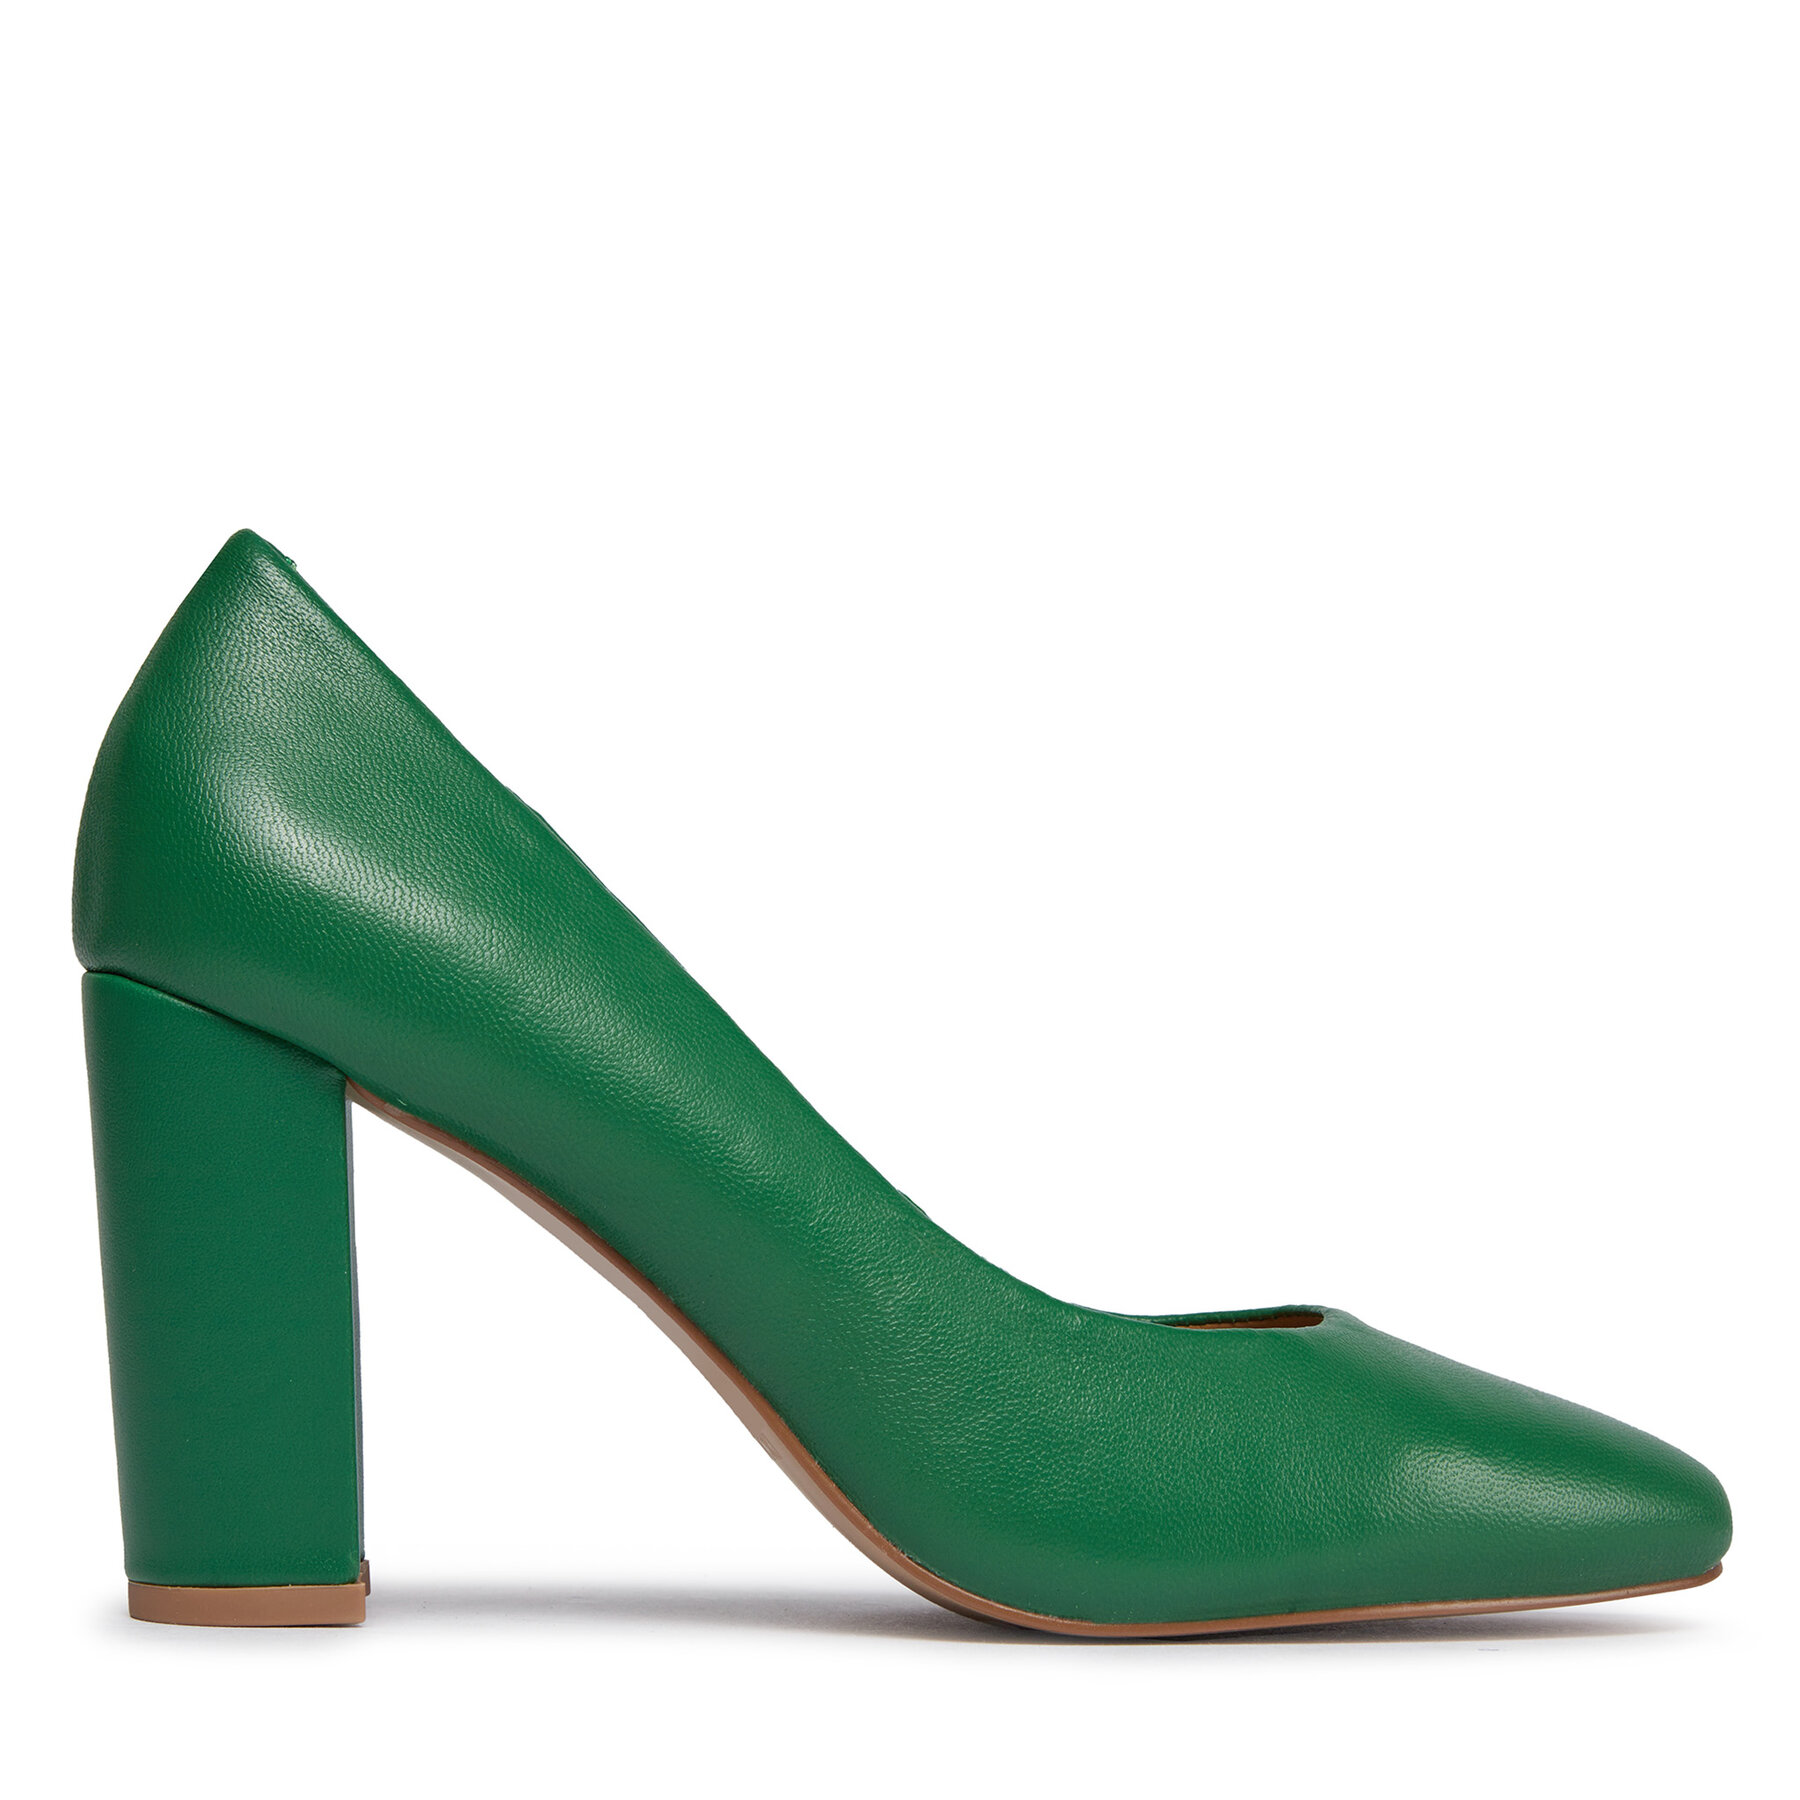 Cipele Lasocki WYL3137-1ZA Green